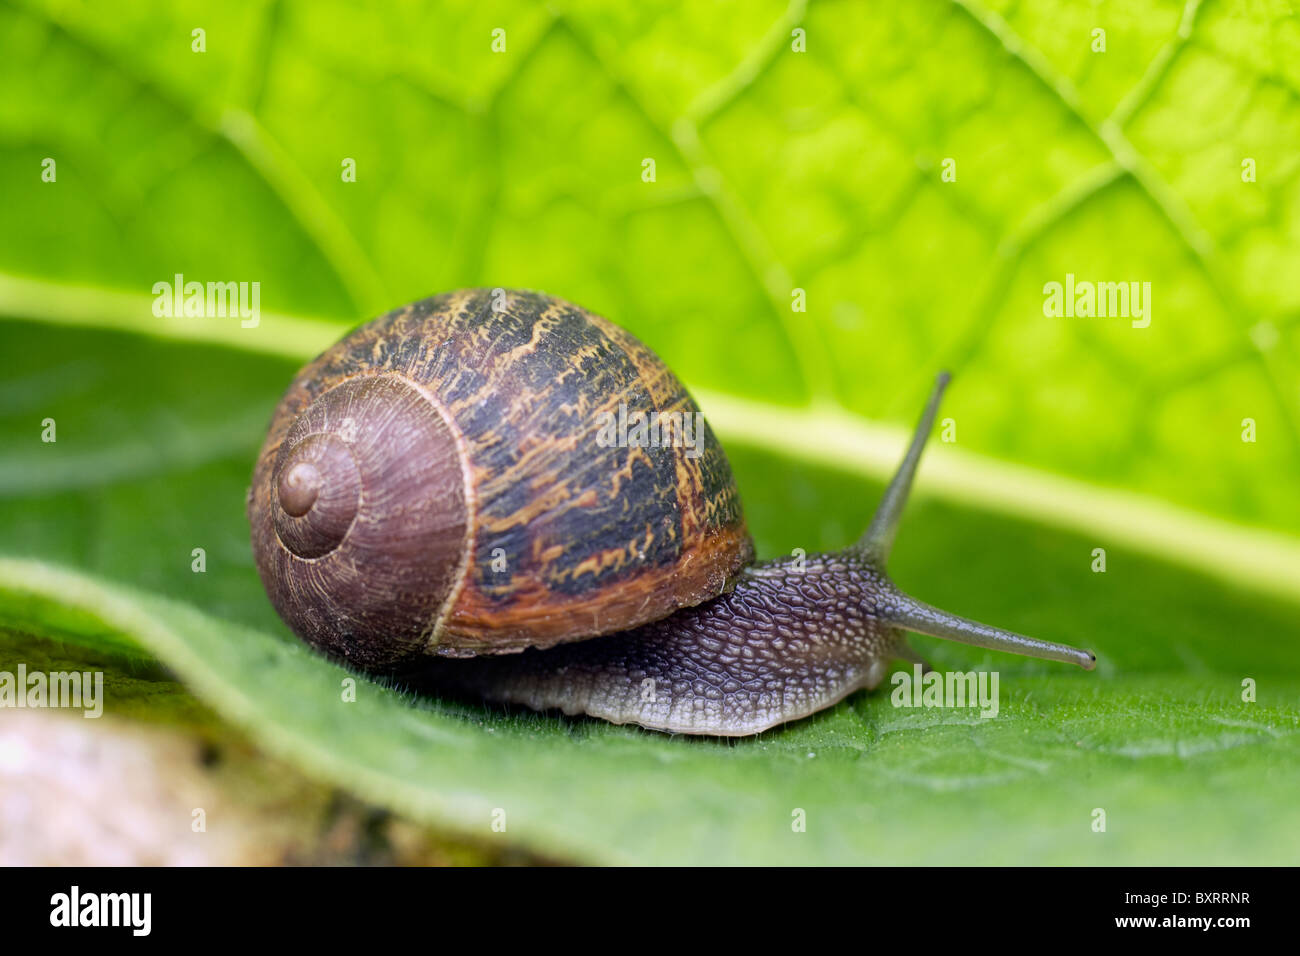 Garden snail on green leaf Stock Photo